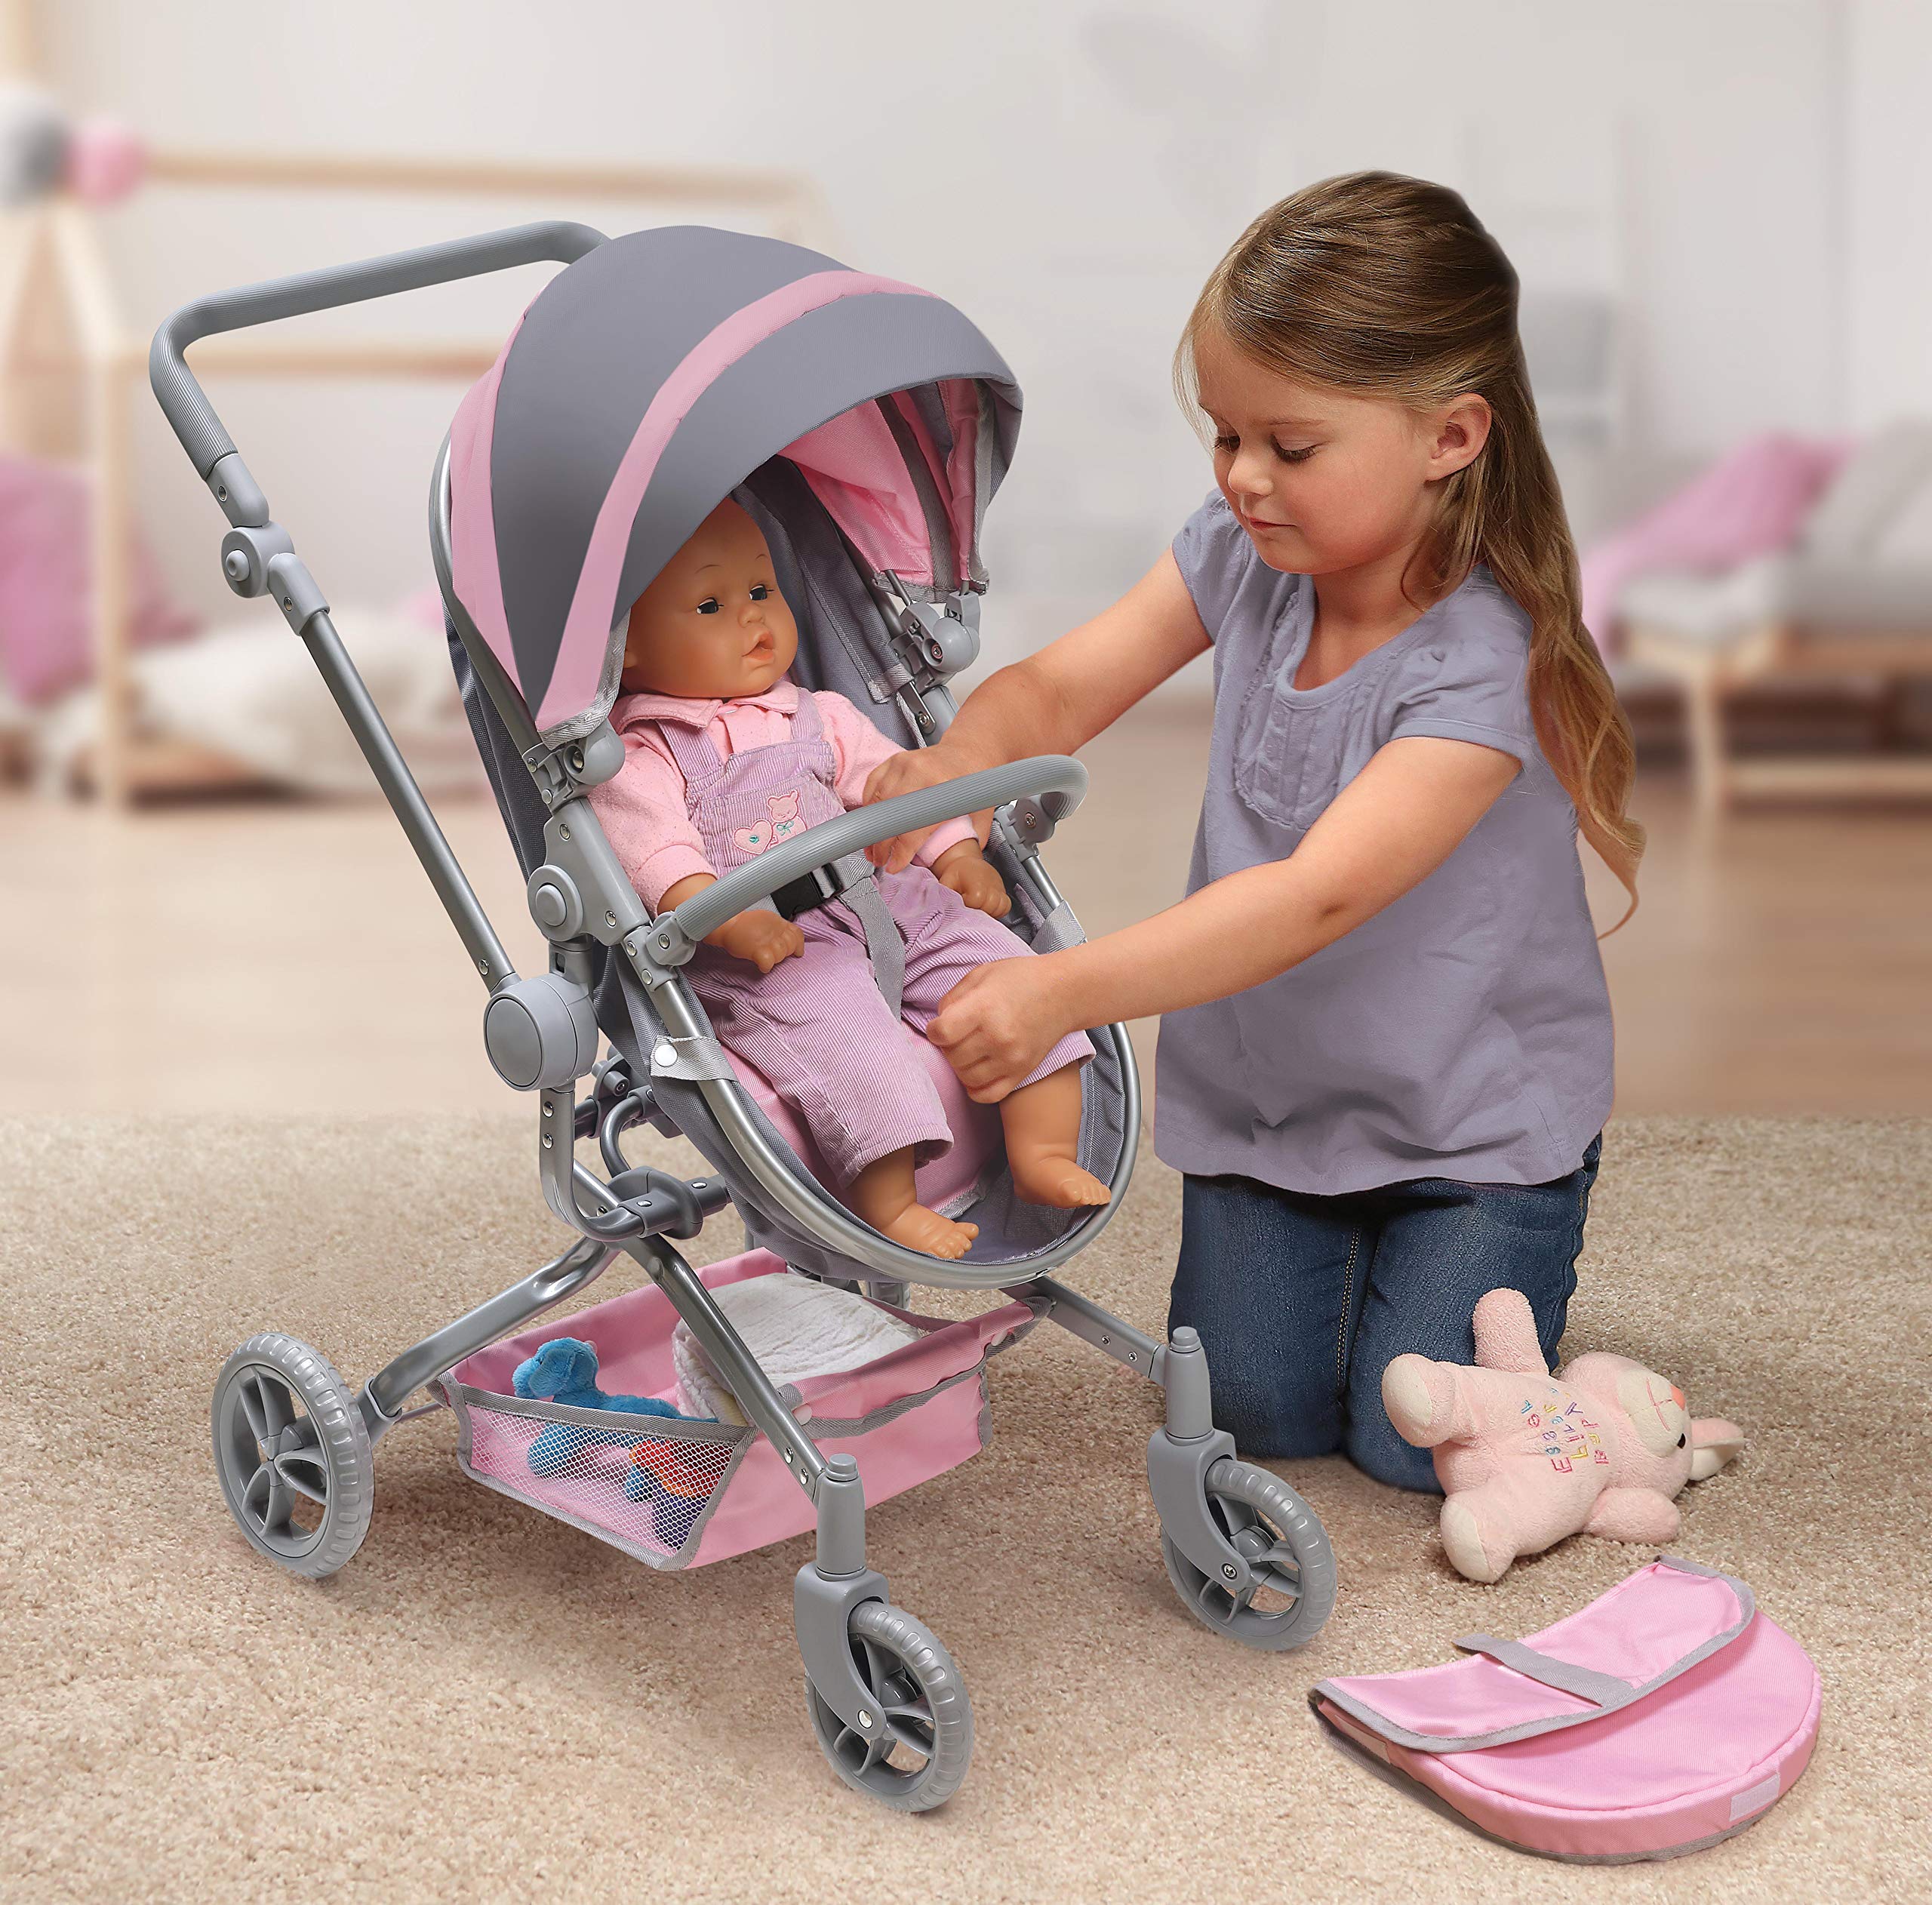 Badger Basket Toy Doll Daydream Multi-Function Pretend Play Pram & Stroller for 20 inch Dolls - Gray/Pink